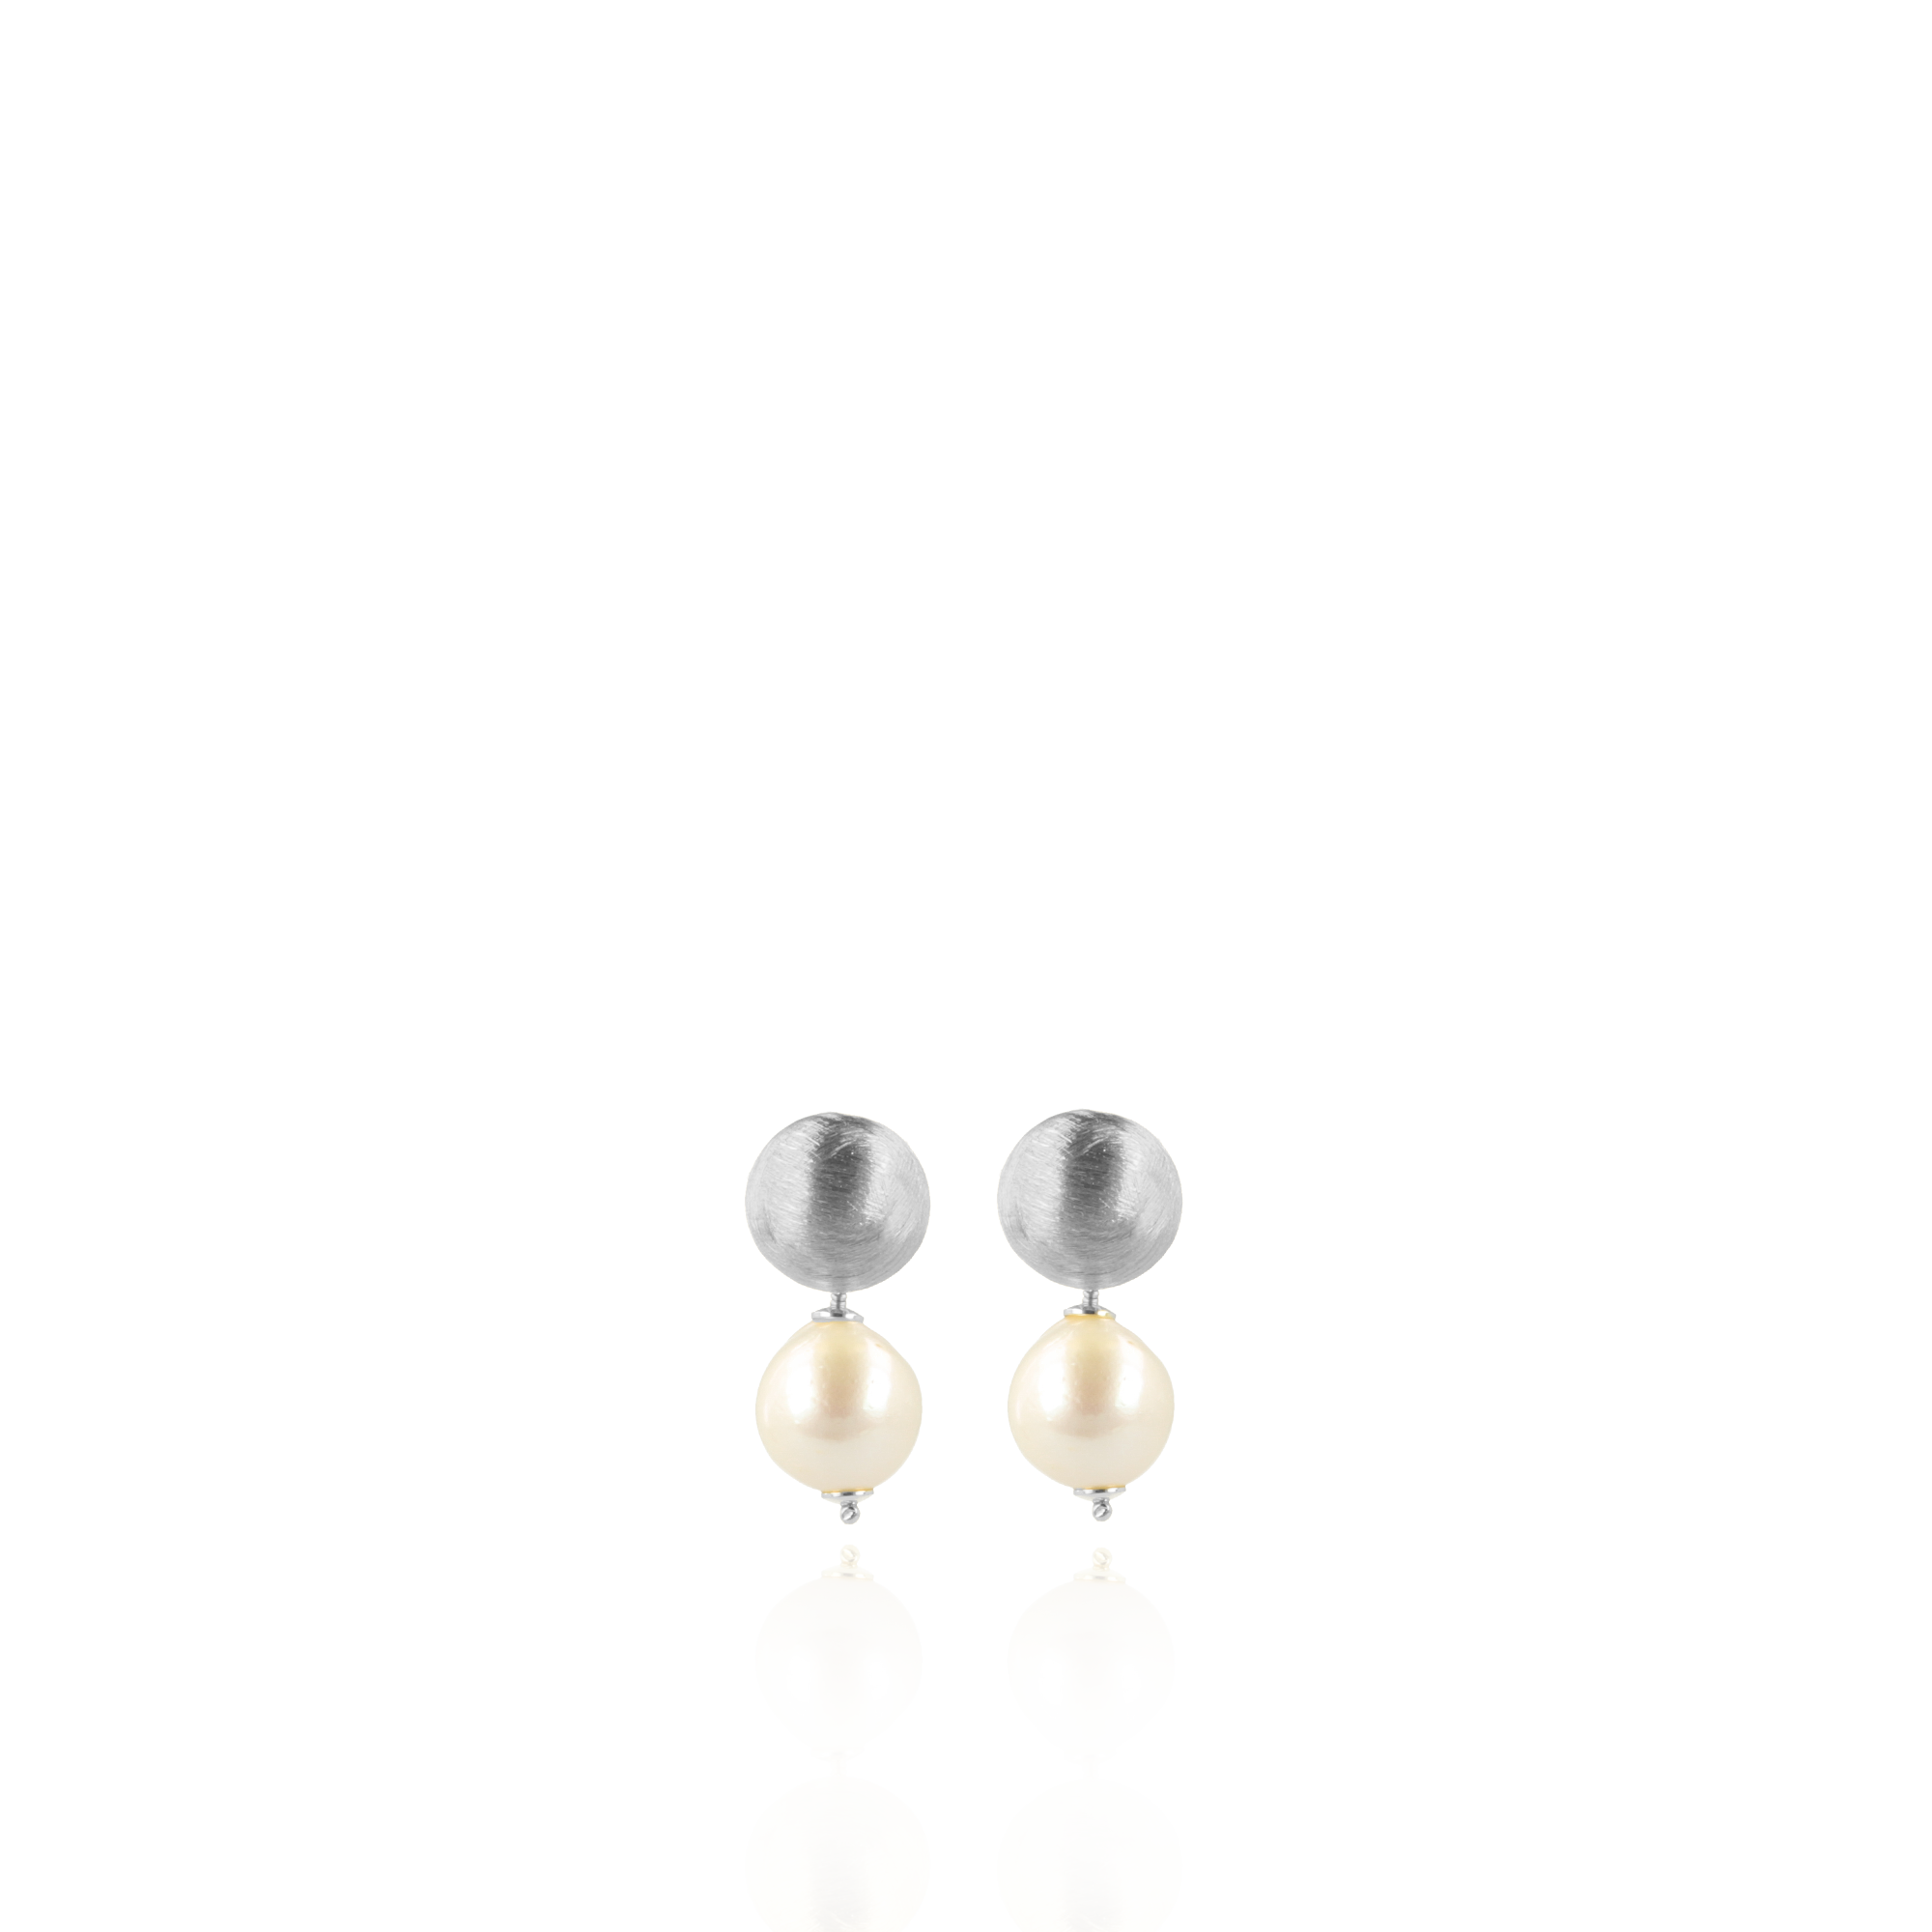 Parel Earrings Flore Wild Bol Light Mlott-theme.productDescriptionPage.SEO.byTheBrand